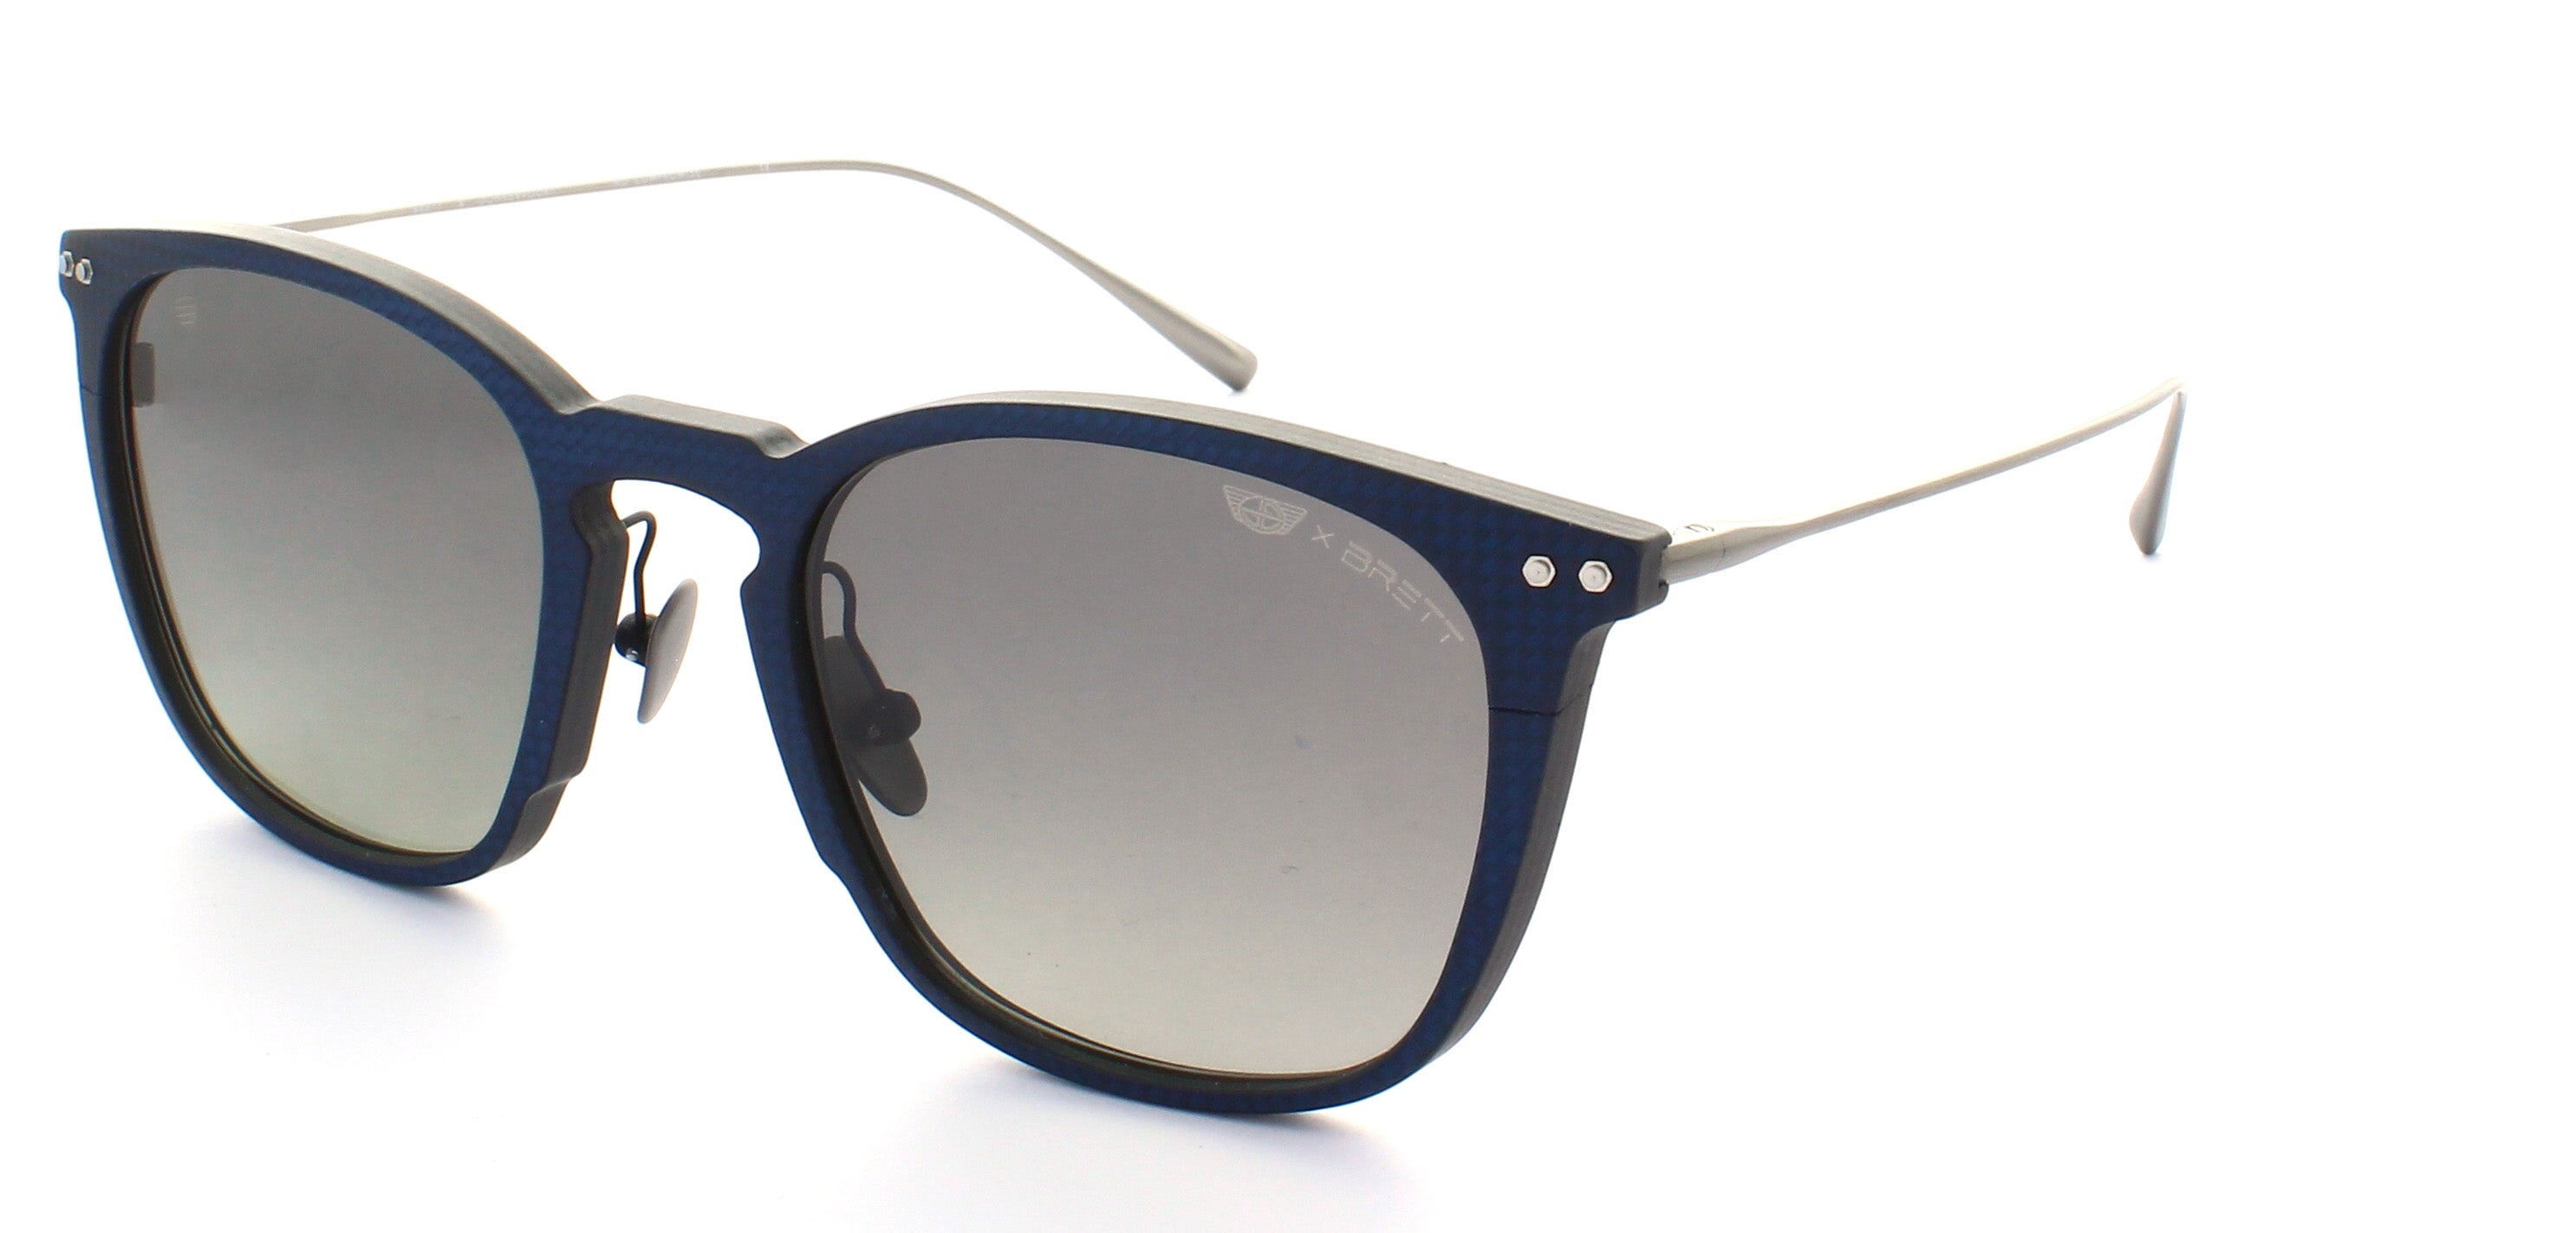 Sunglasses S7 - Matt Blue